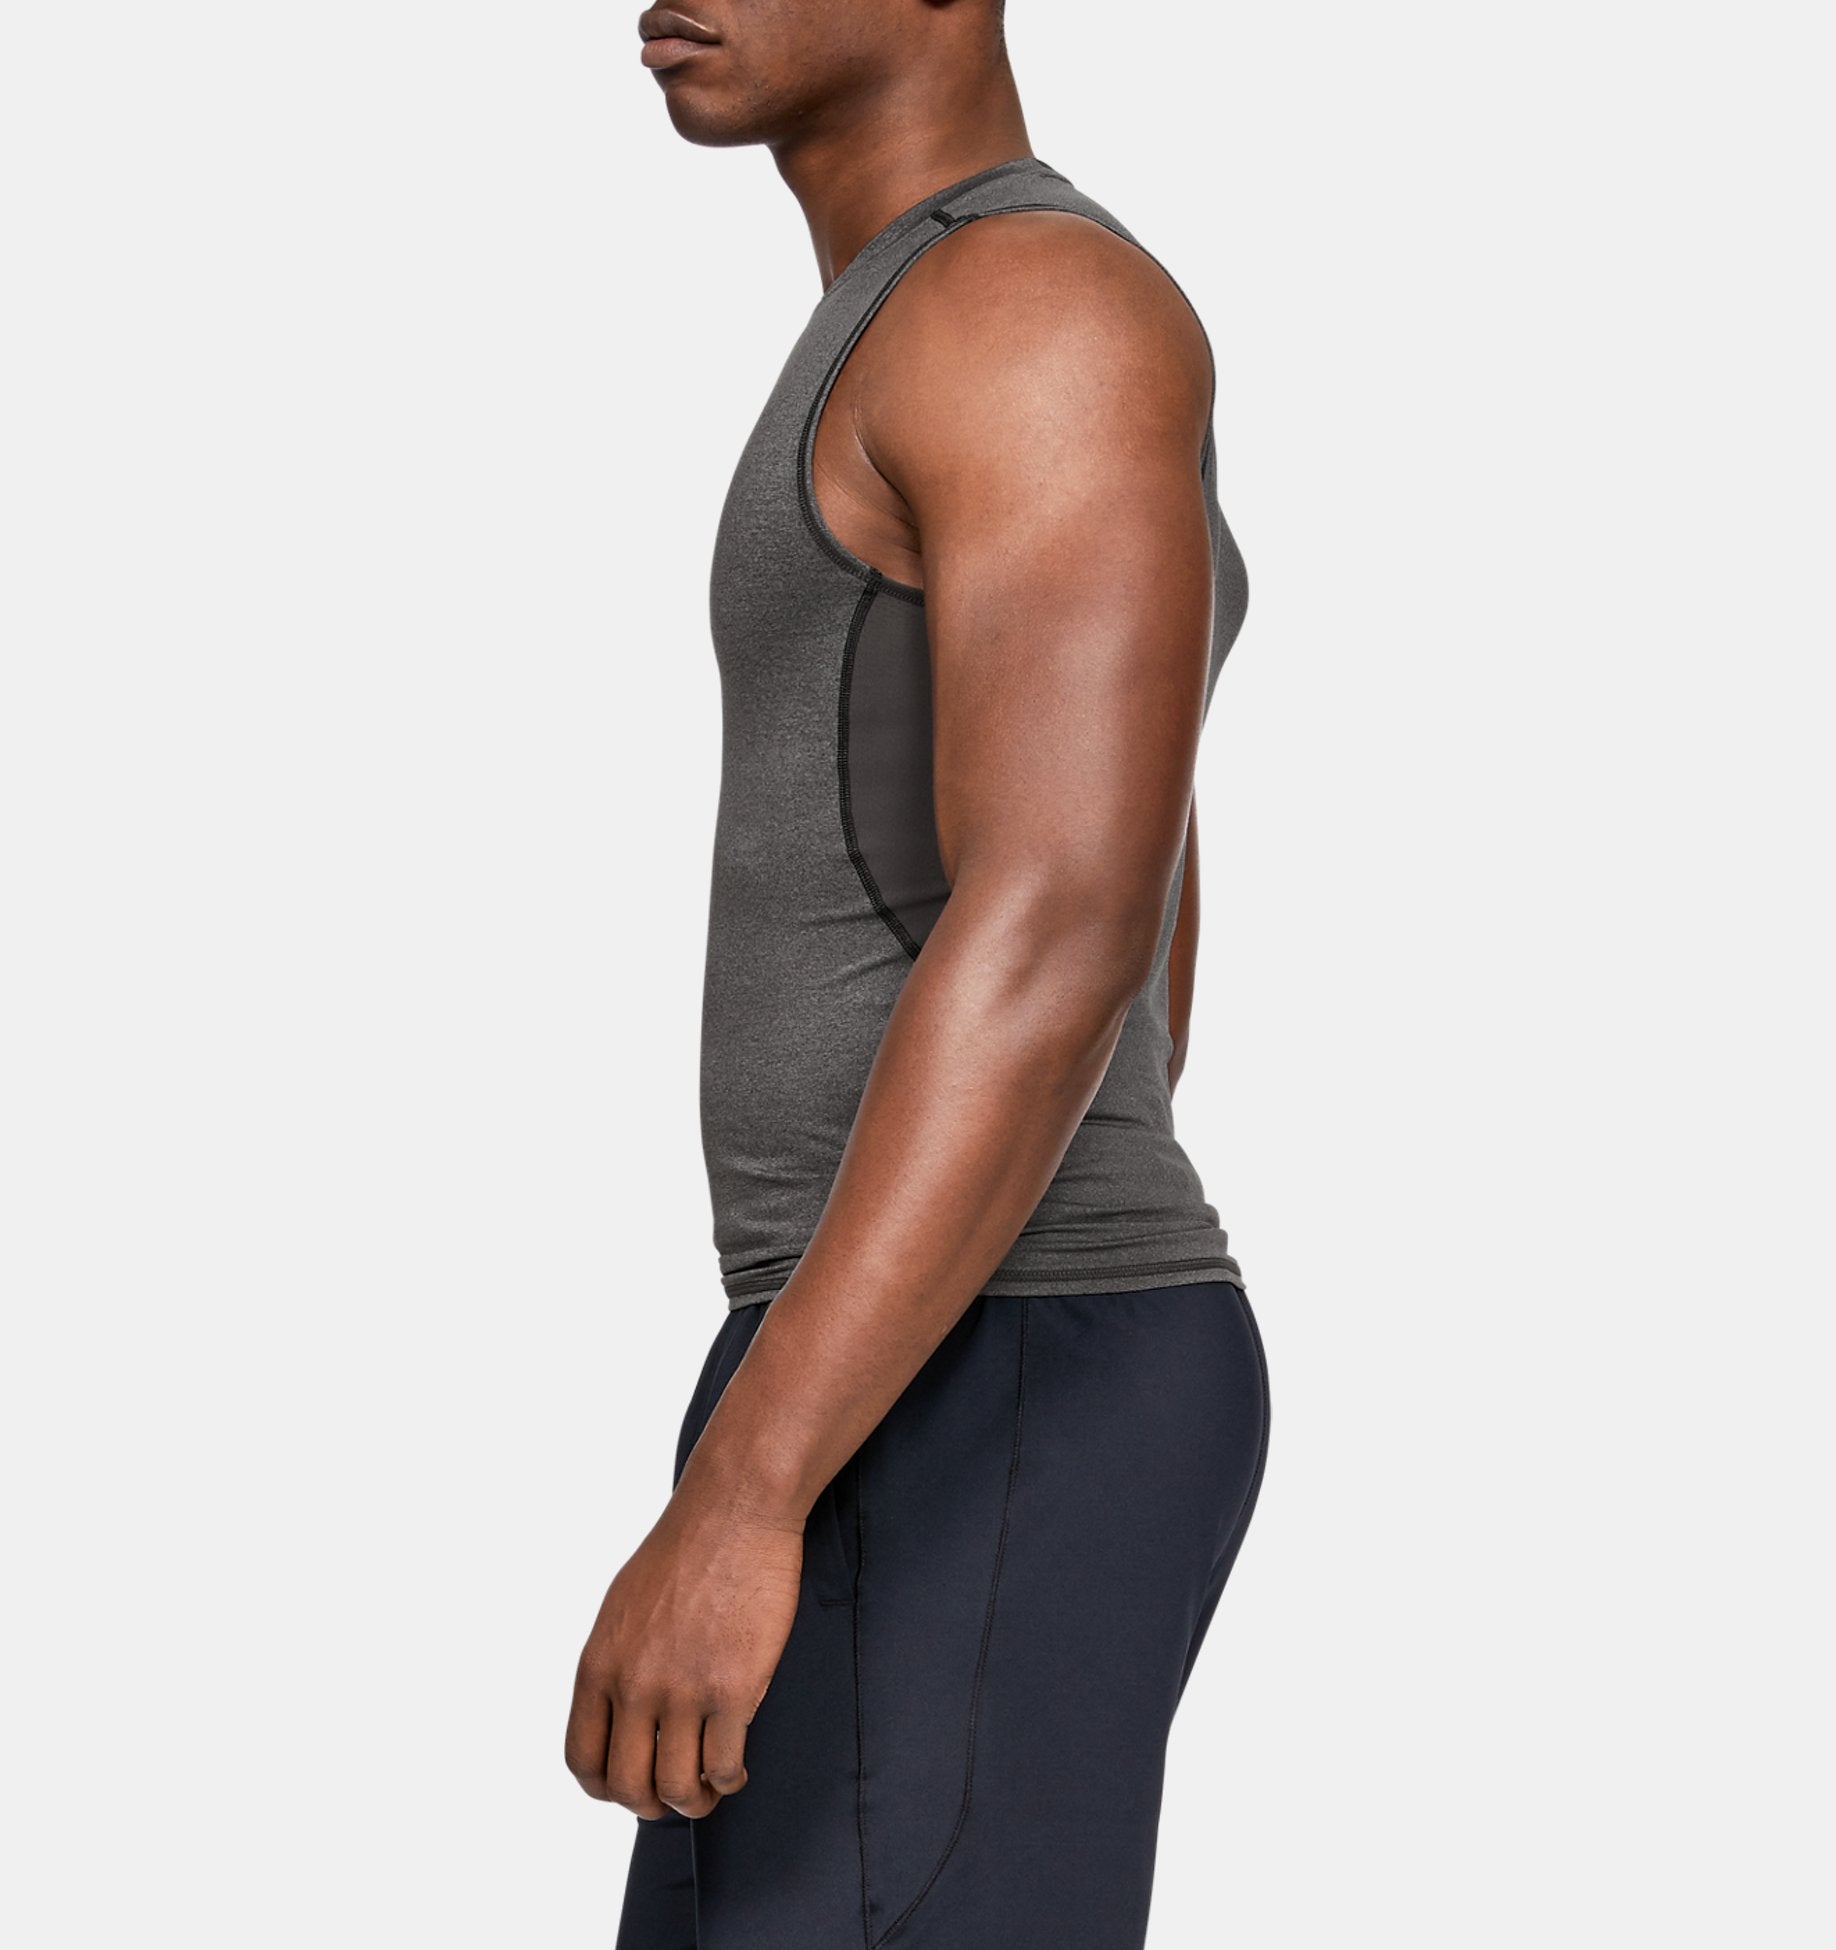 Nike Pro training tank top for men